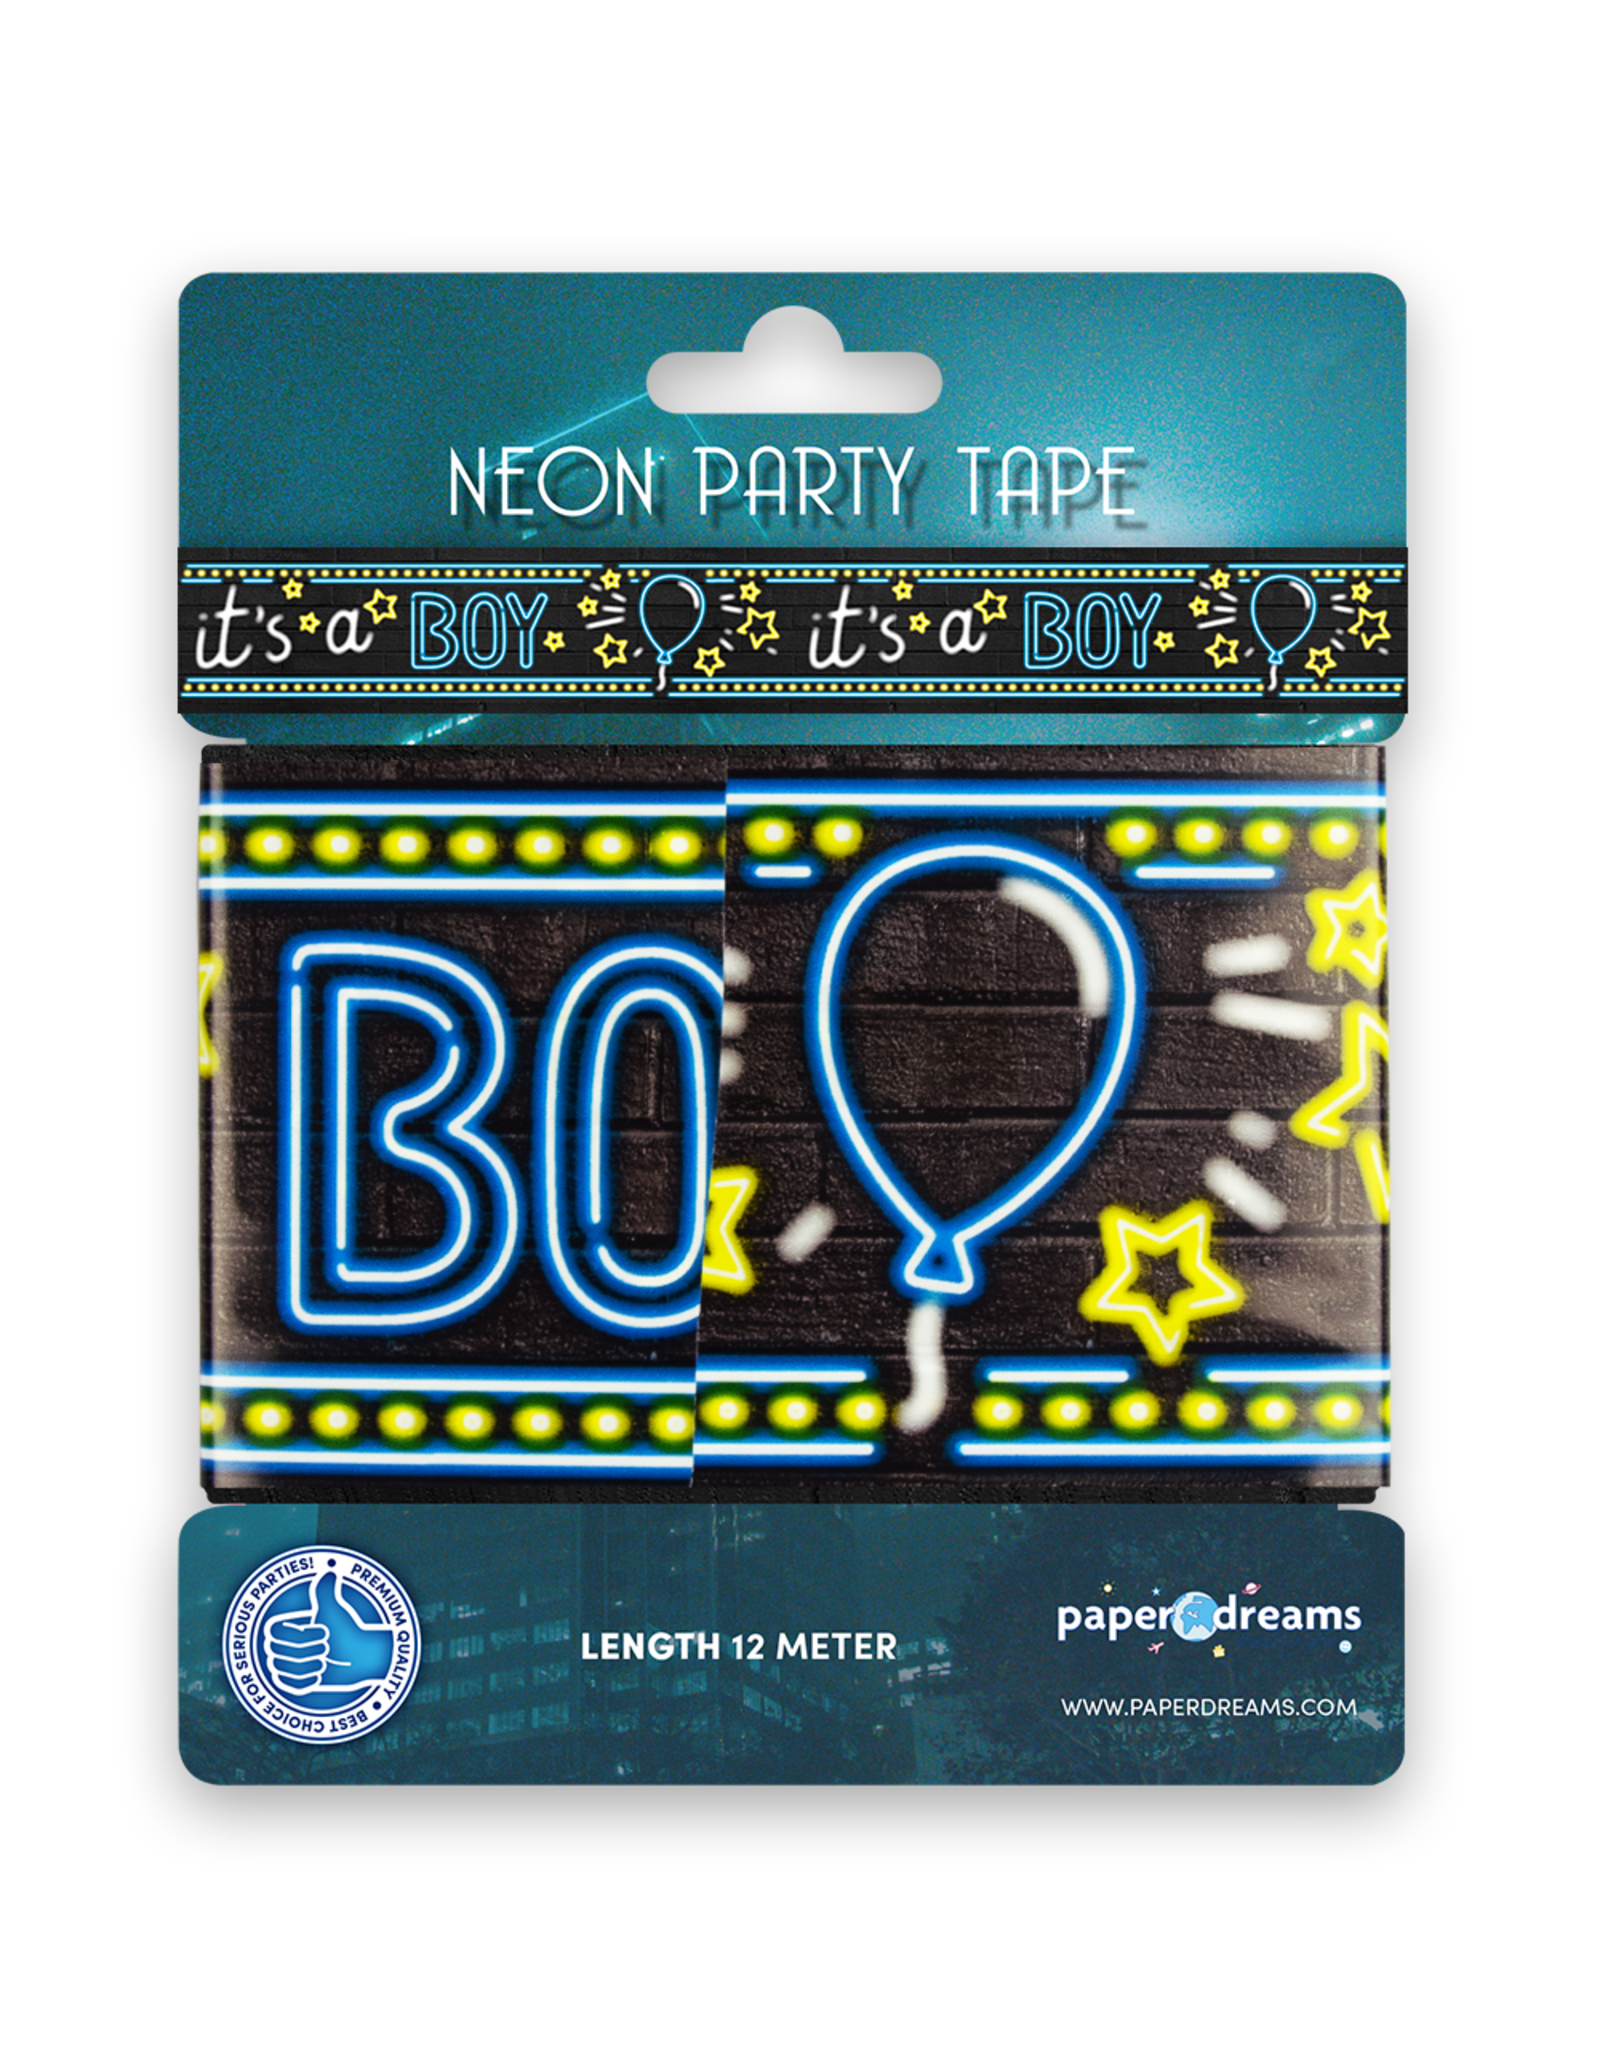 Neon Party Tape - It's a Boy!